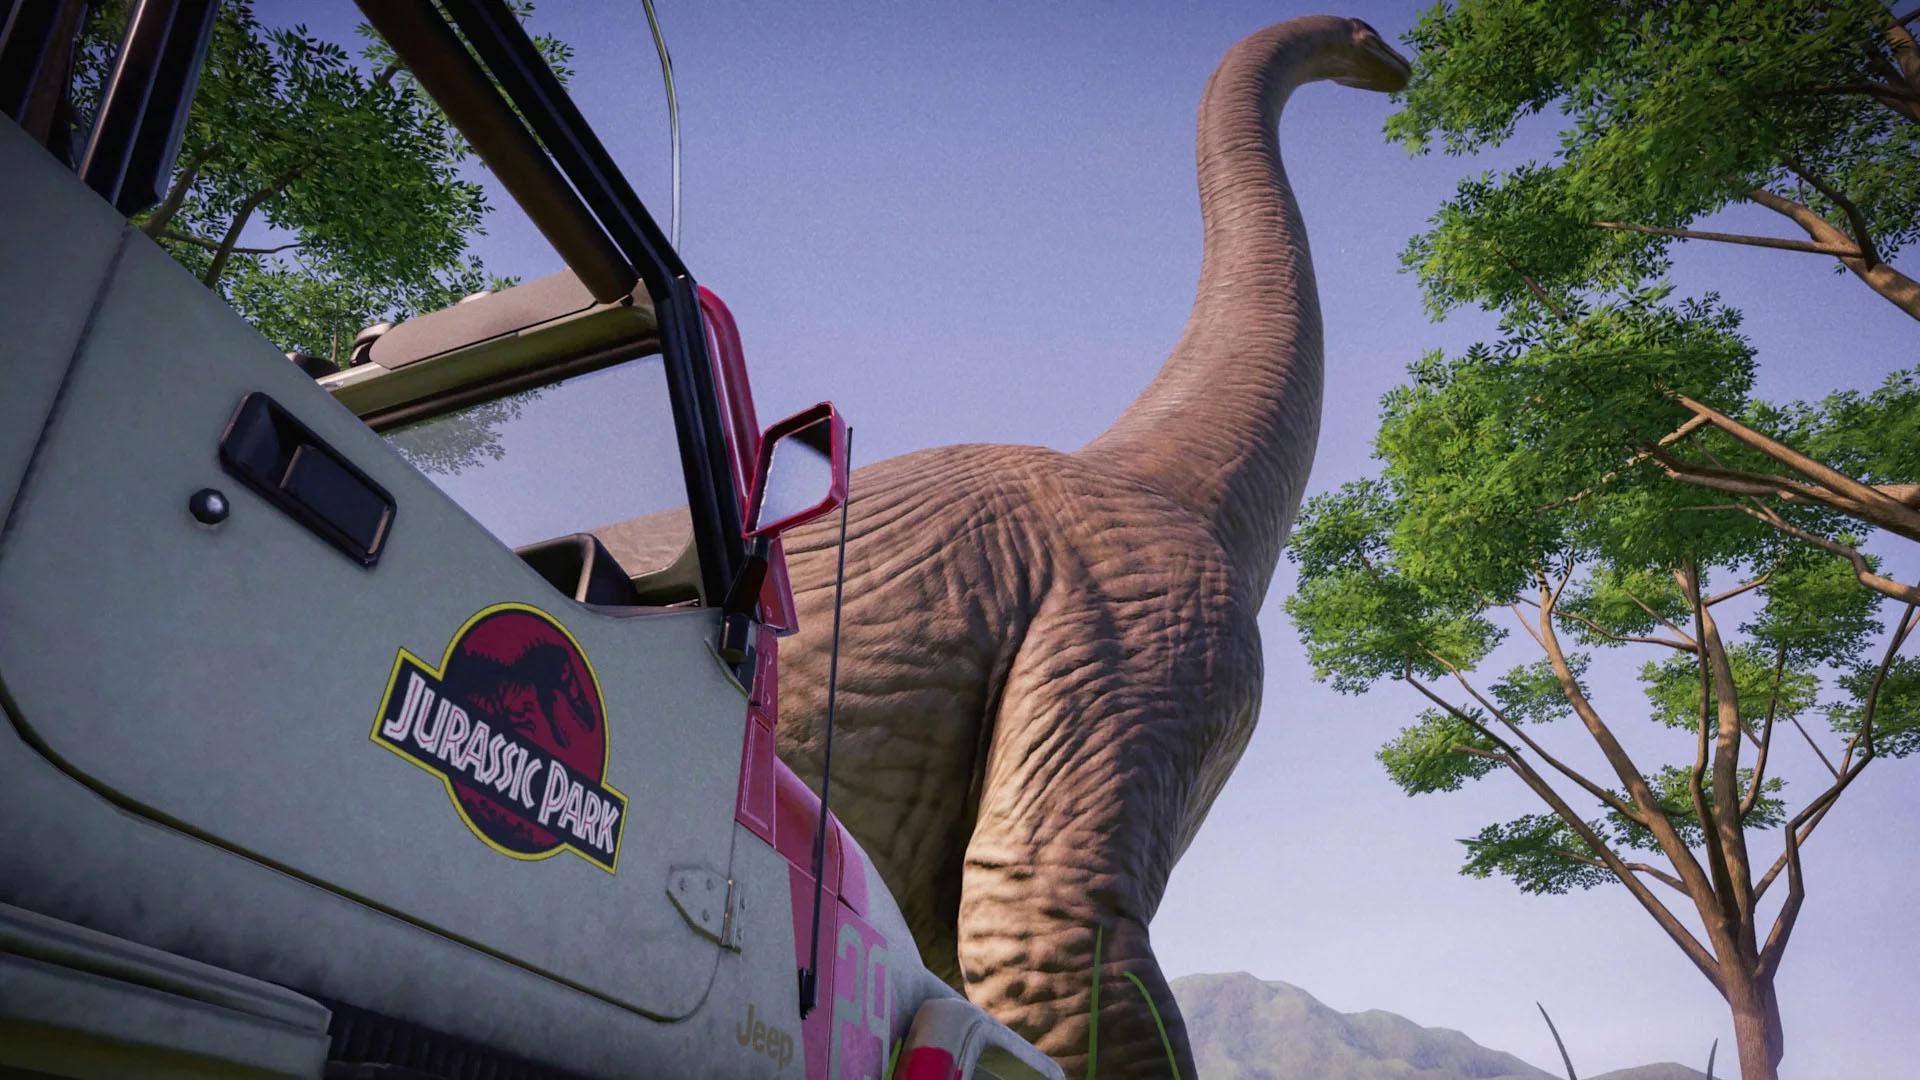 Jurassic World Evolution Return to Jurassic Park